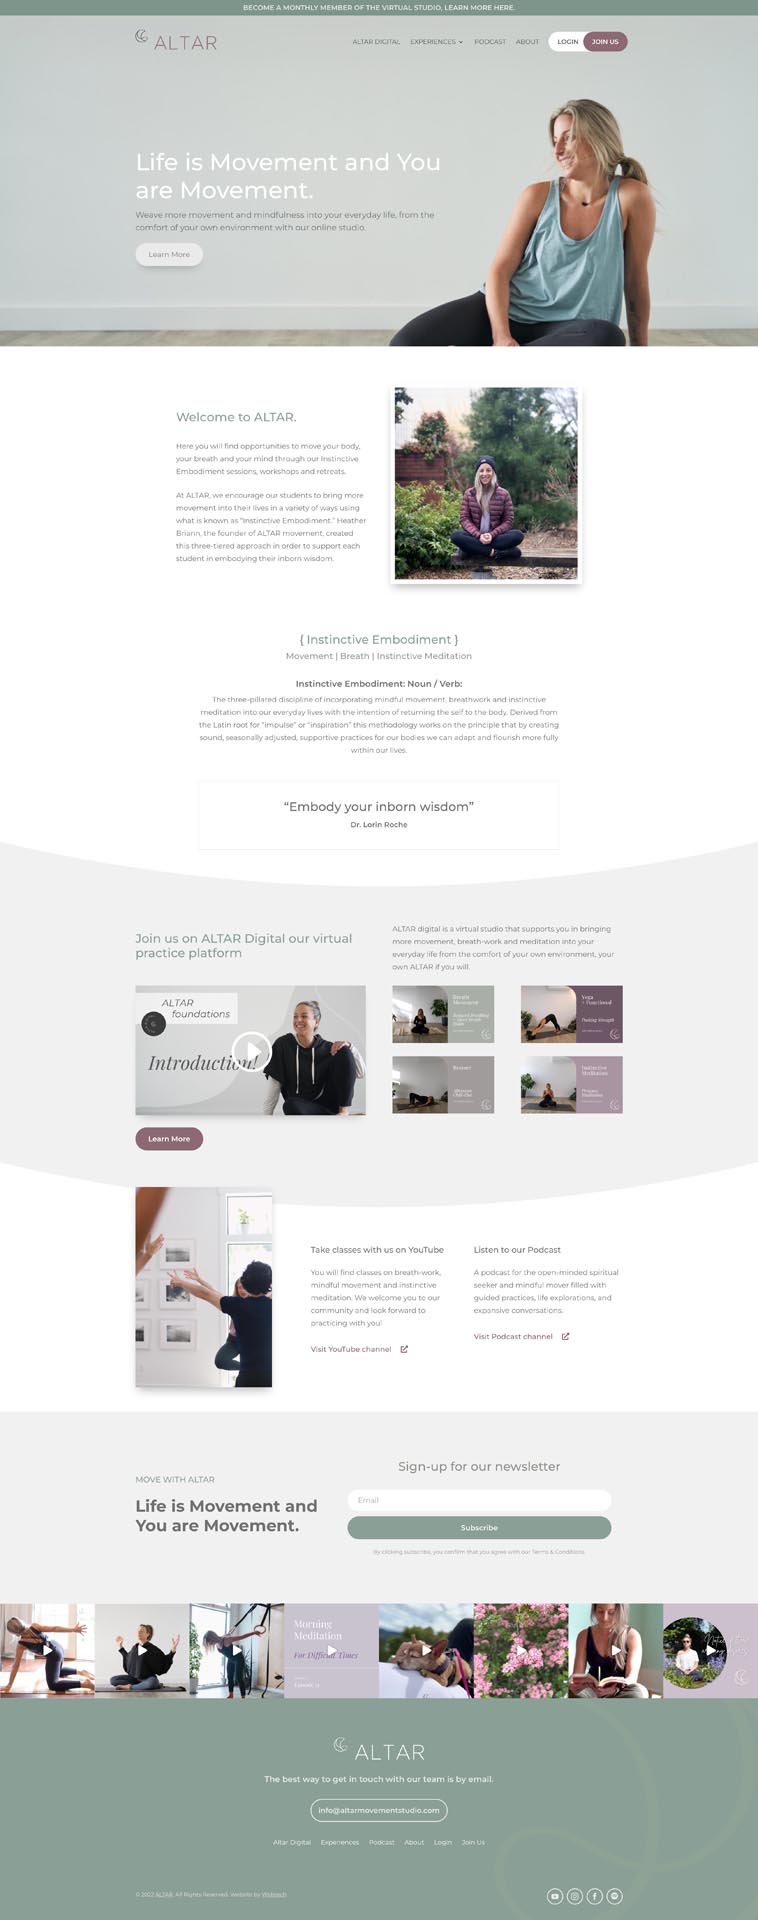 Digital Marketing brand web design services for ALTAR movement Studio